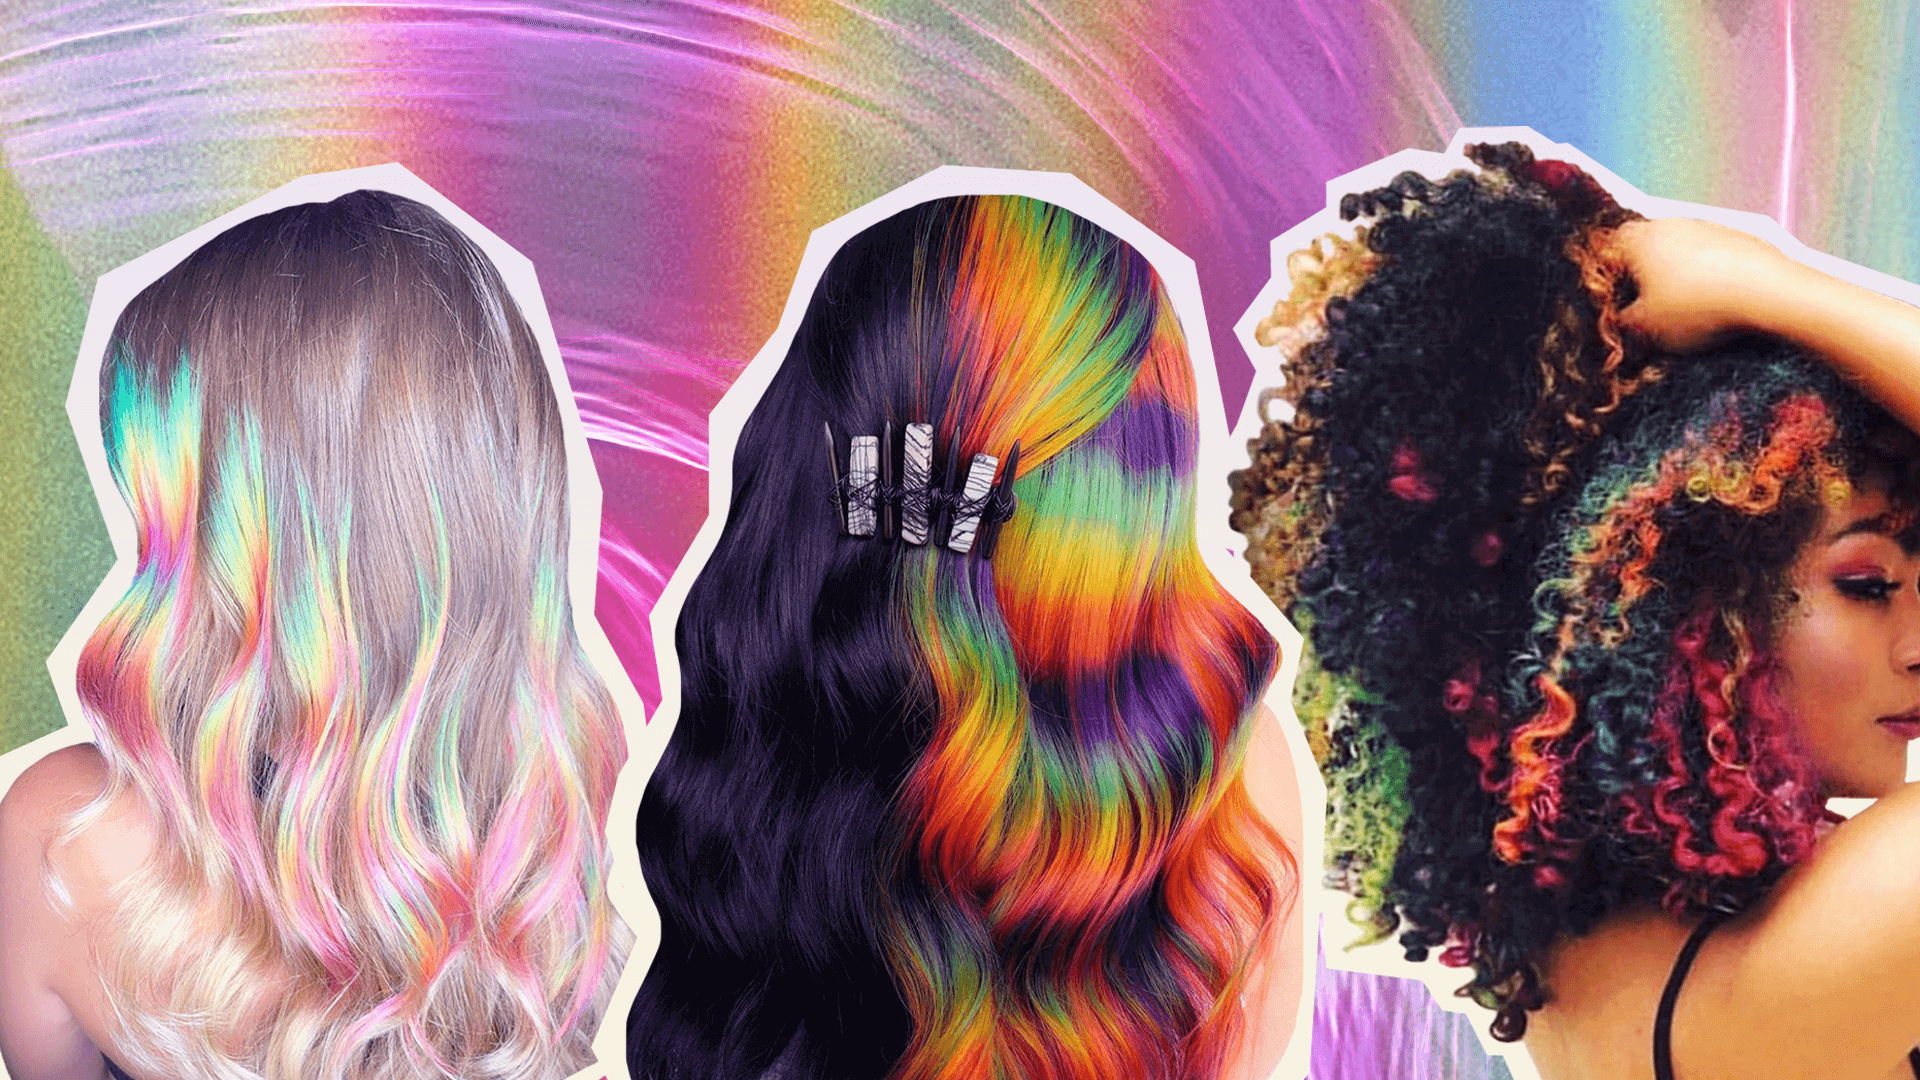 Fall 2020 Trend Alert: Hide & Seek Rainbow Hair - The Tease